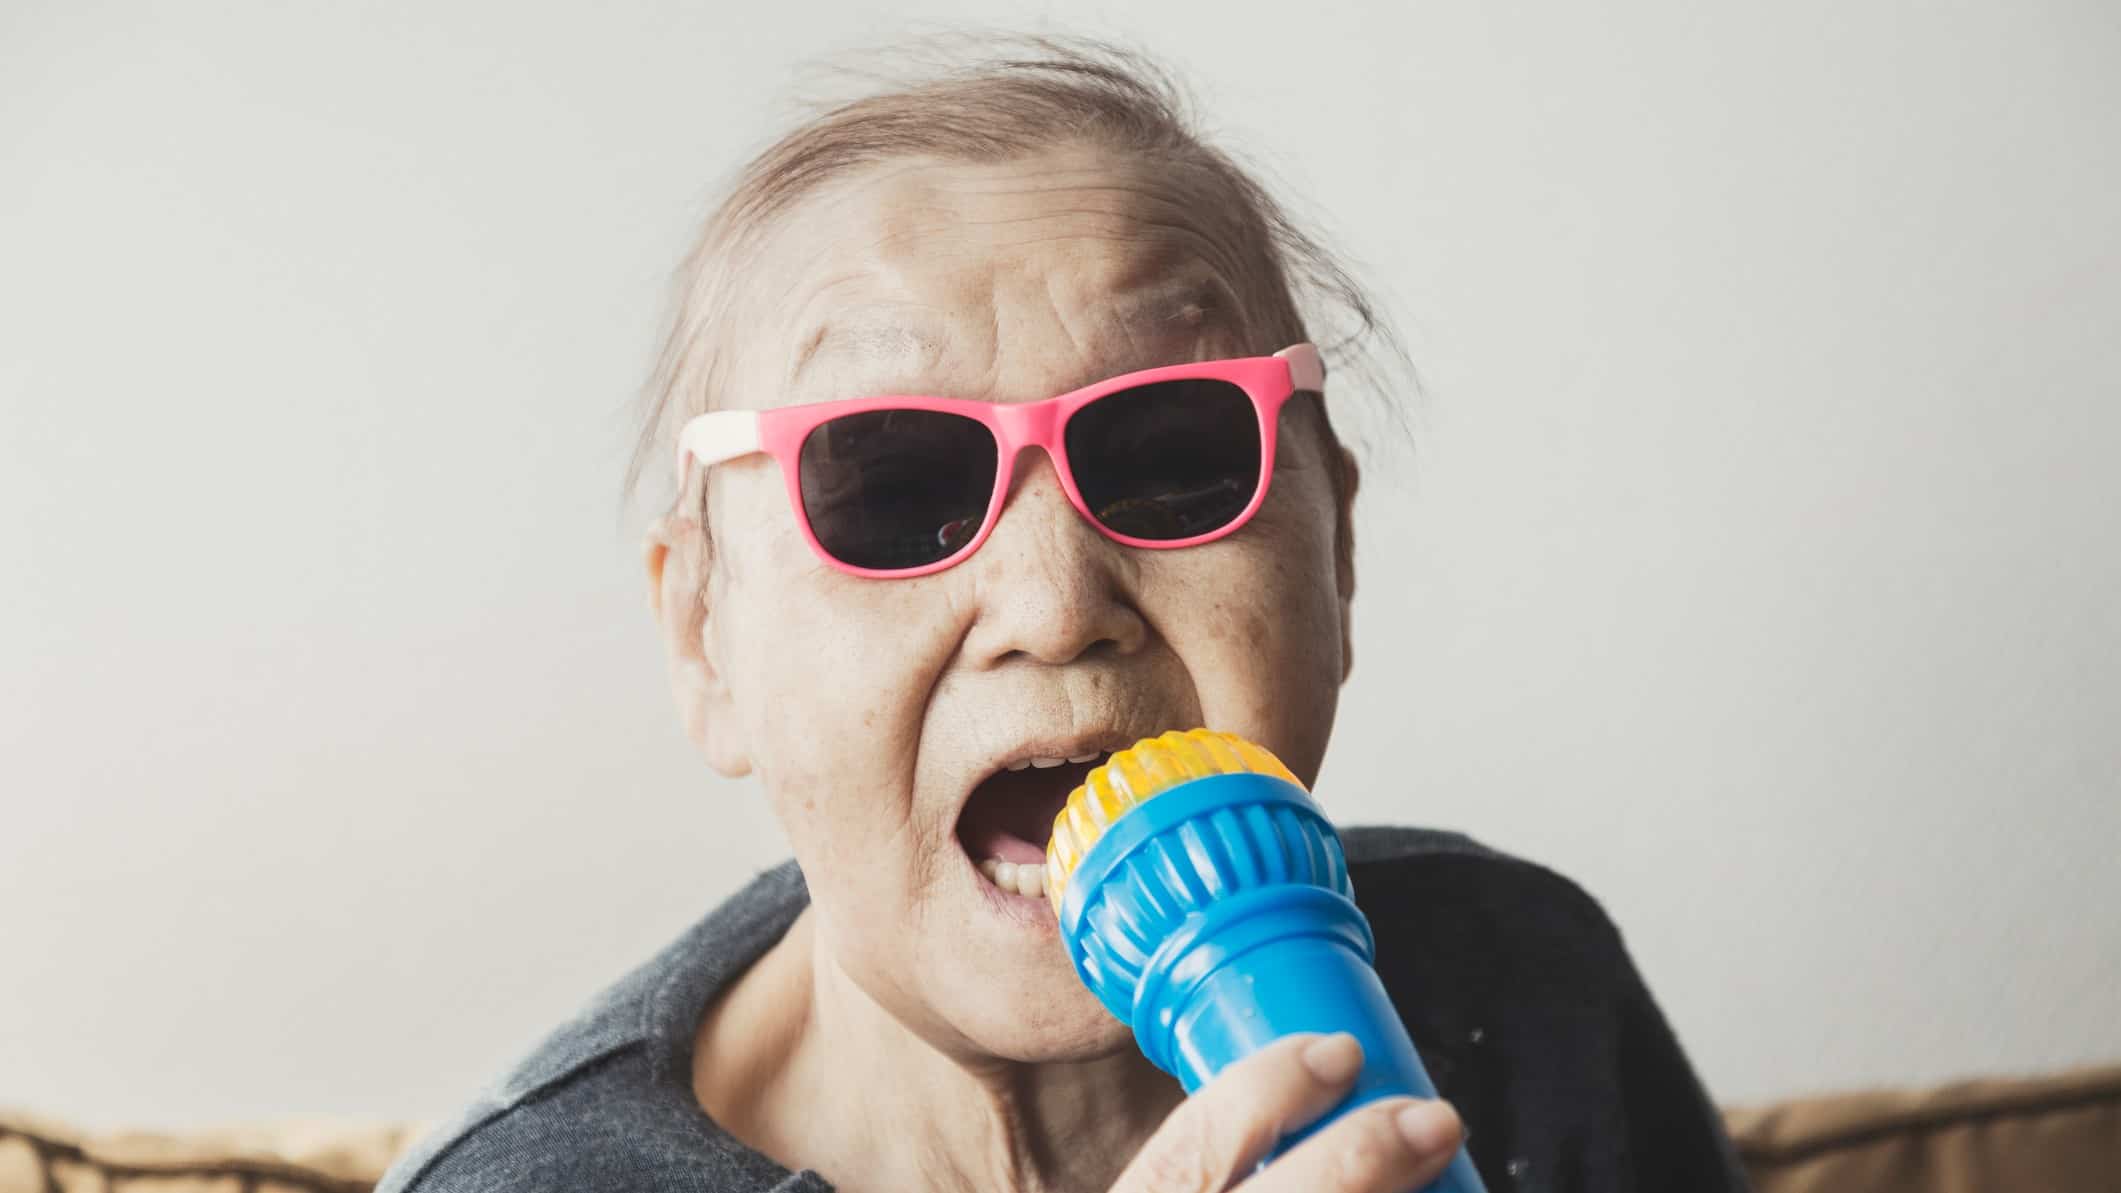 An elderly Asian man sings karaoke into a microphone, wearing cool pink sunglasses.